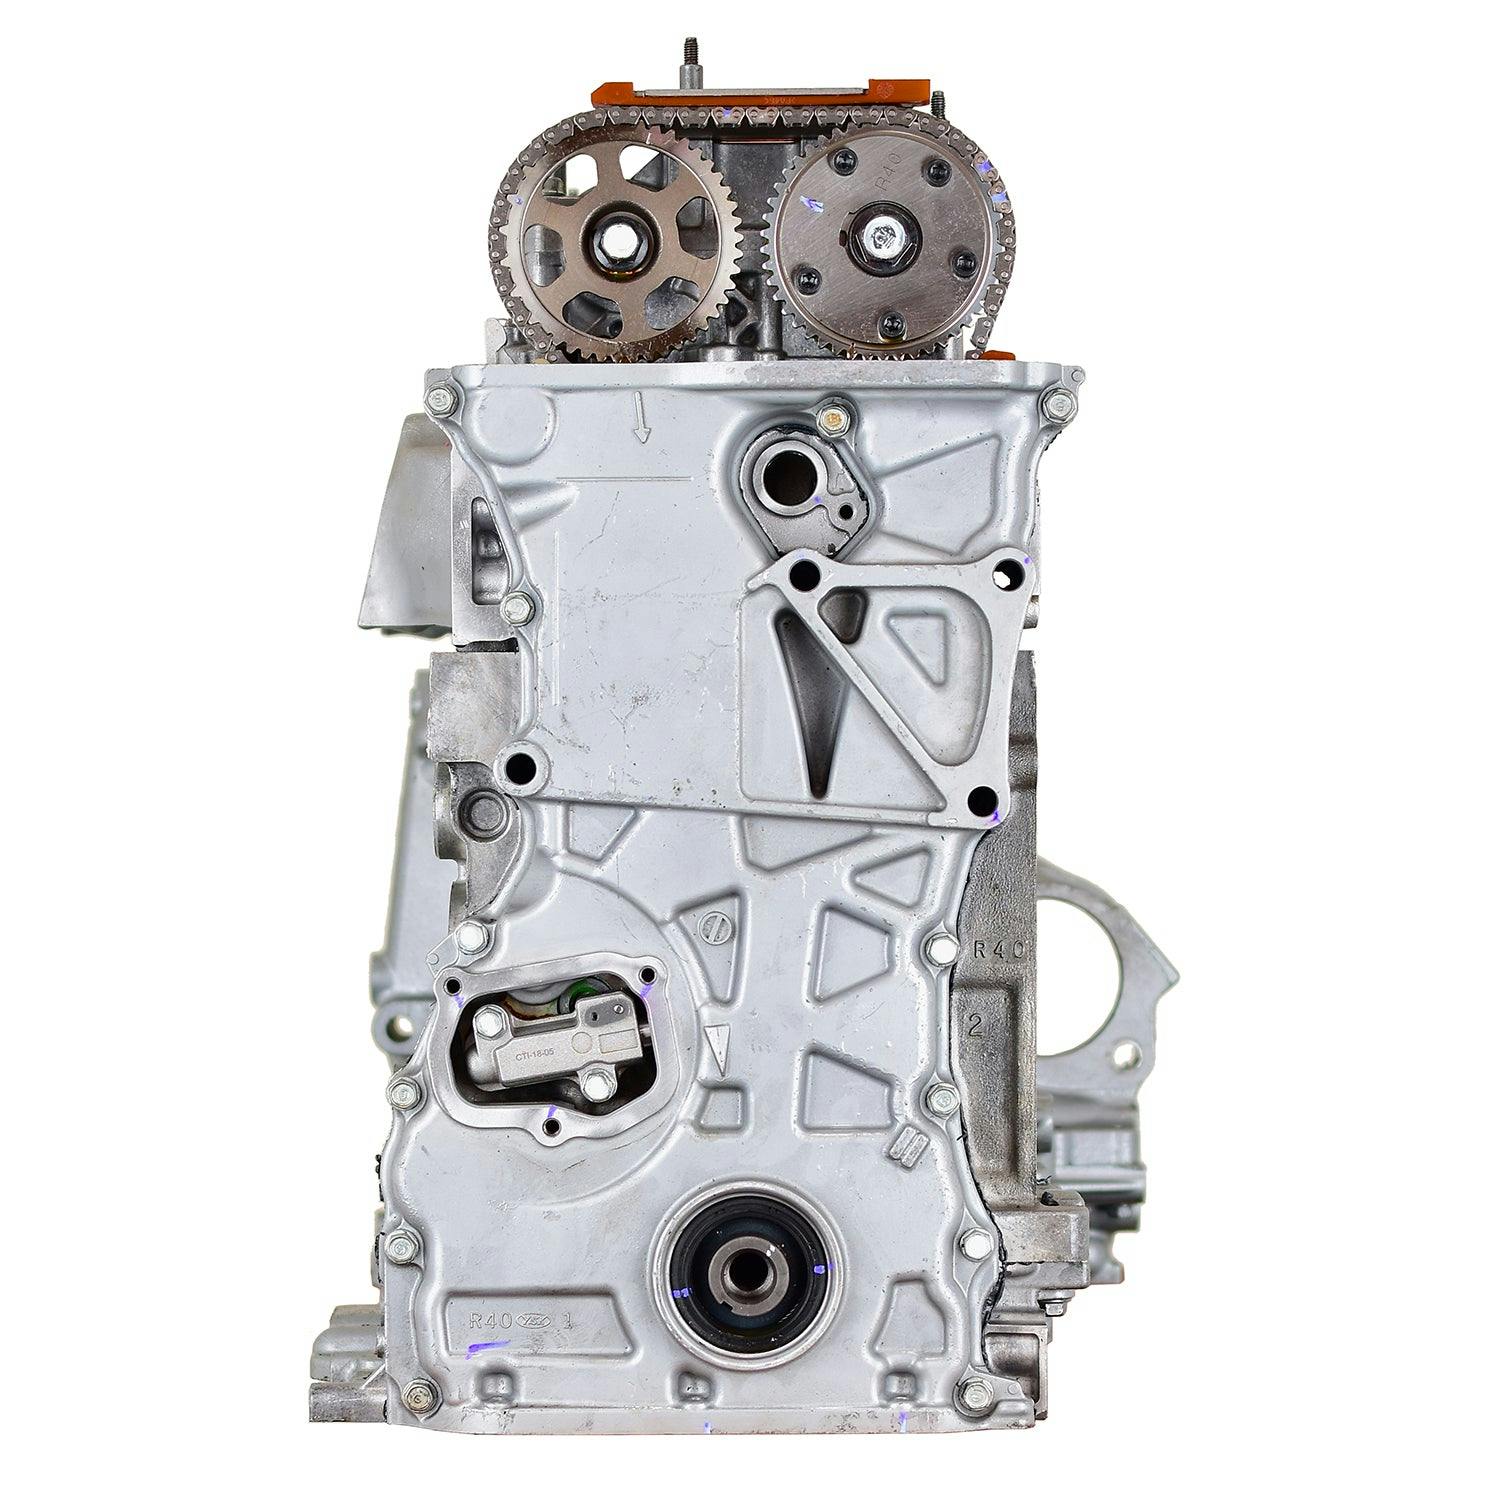 2.4L Inline-4 Engine for 2008-2015 Honda Accord/Crosstour